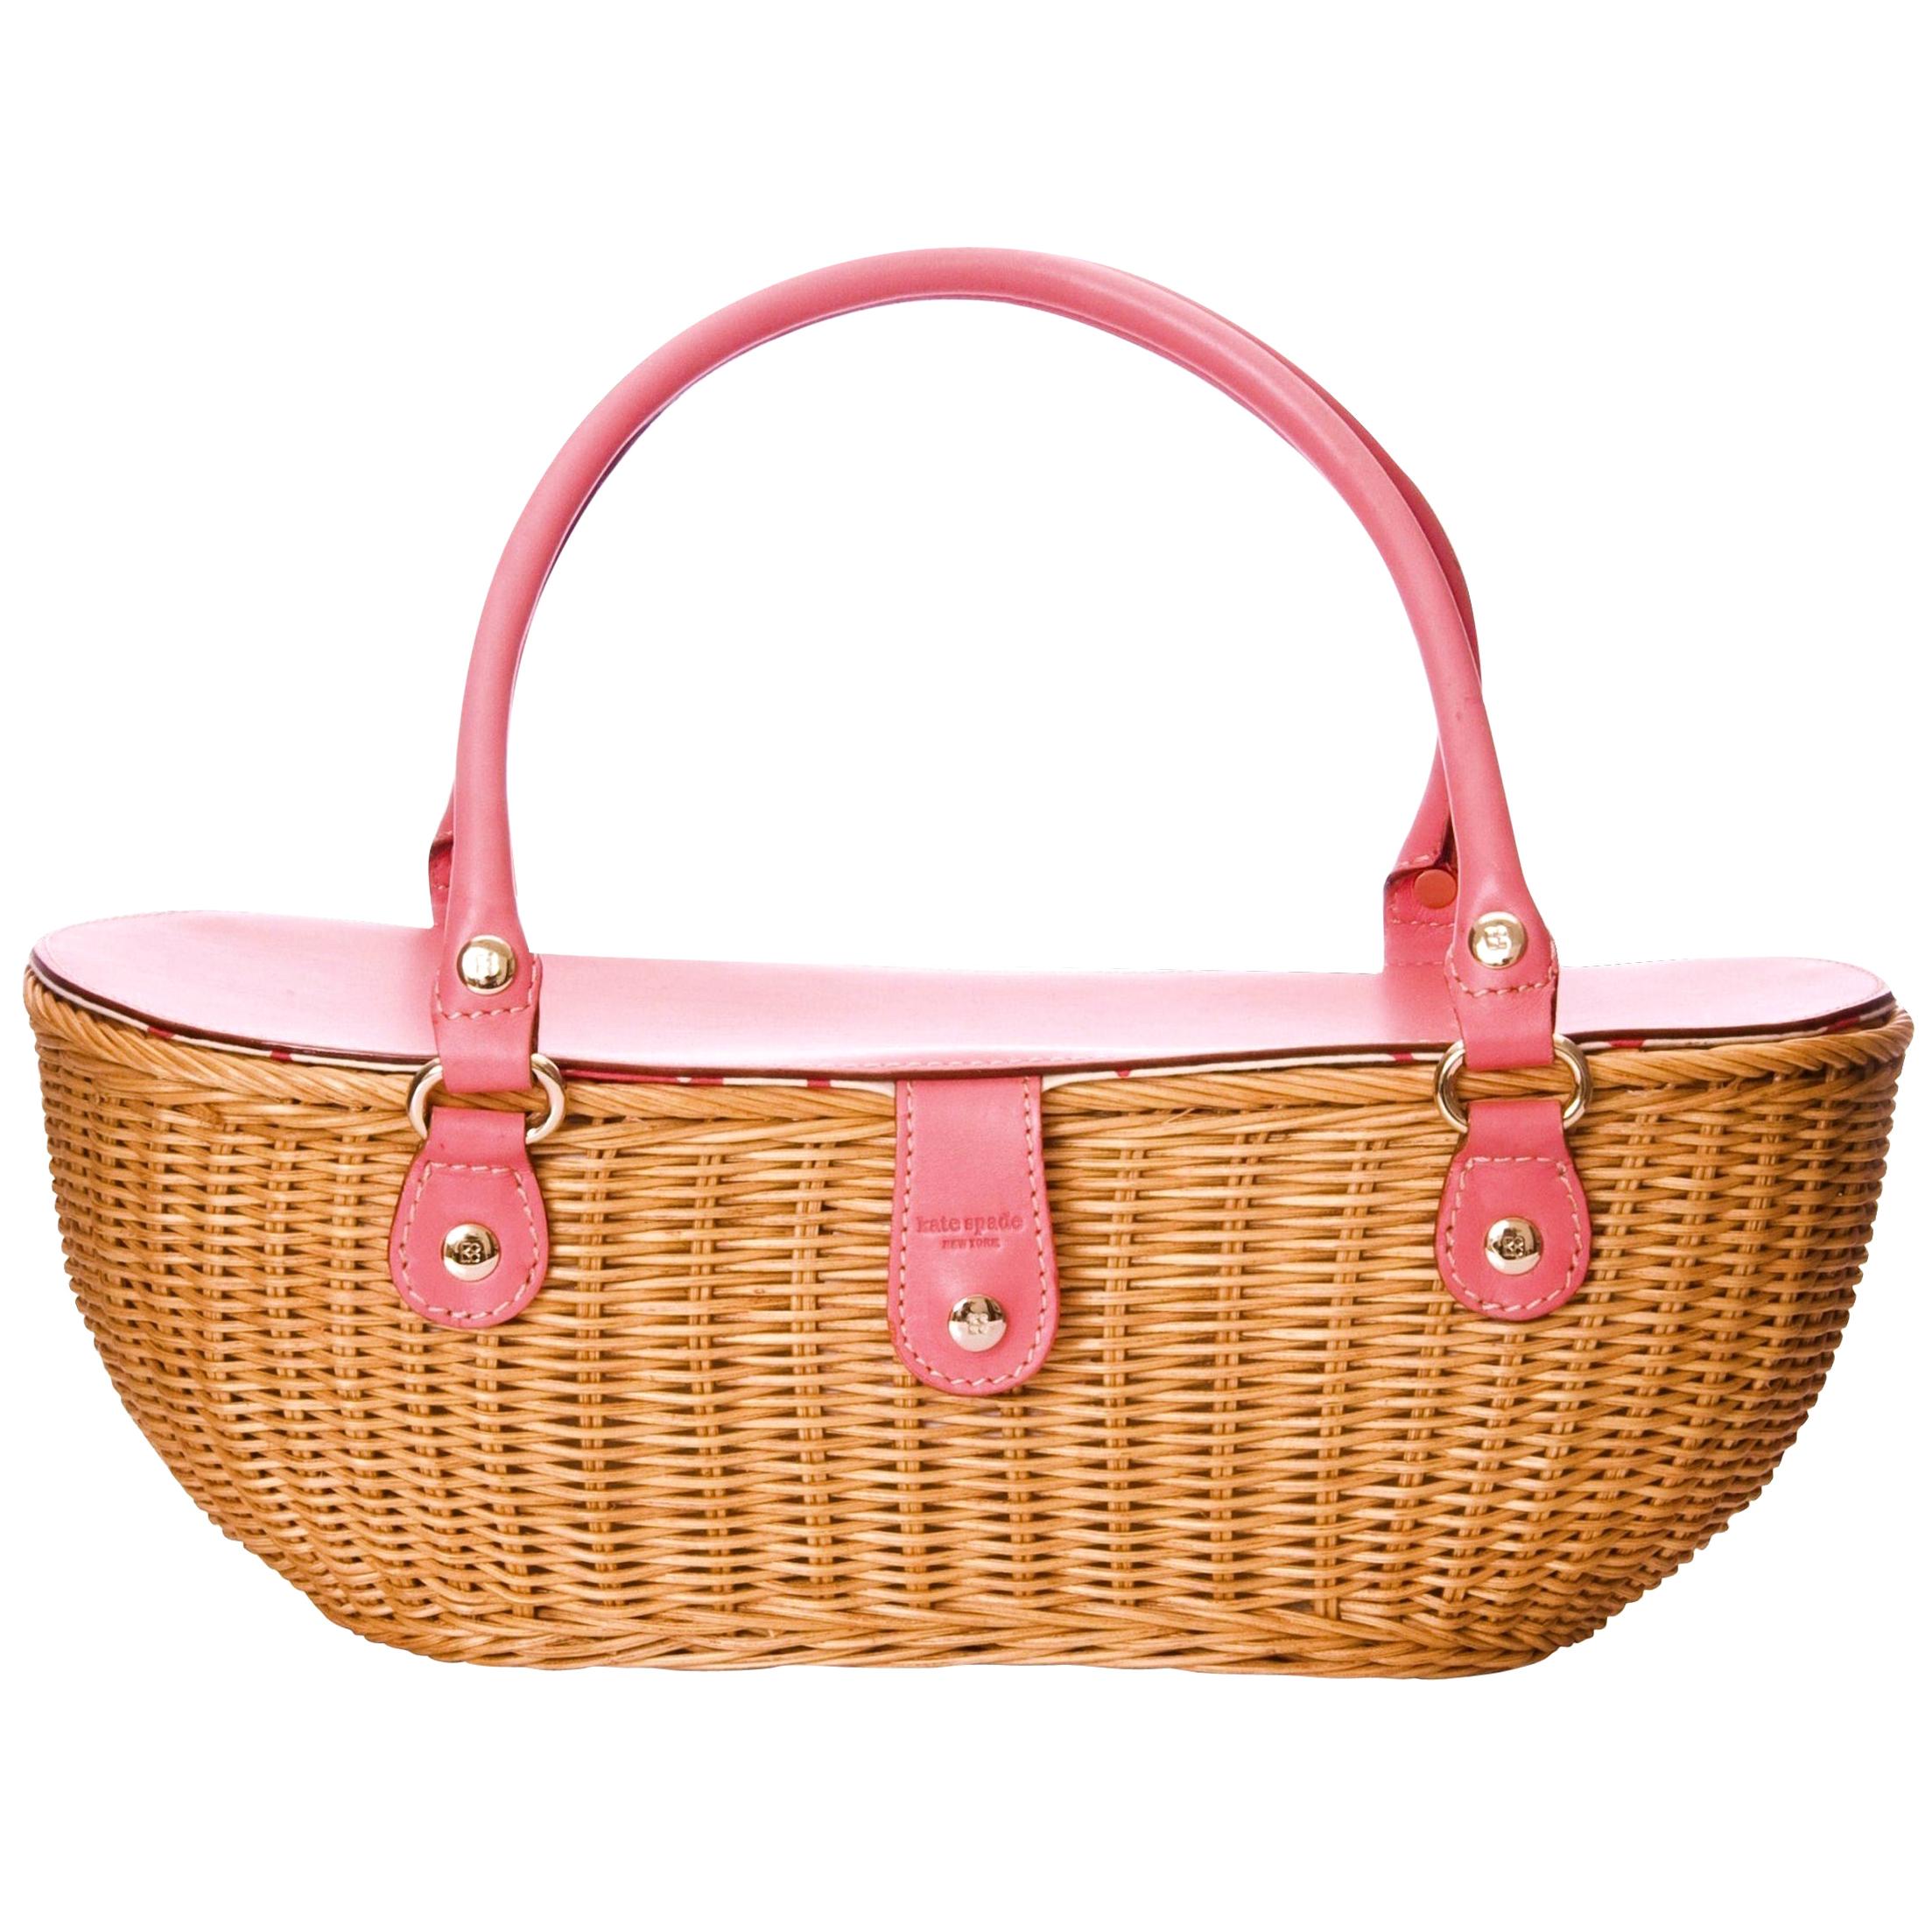 New Kate Spade Spring 2005 Large Pink Wicker Basket Bag 